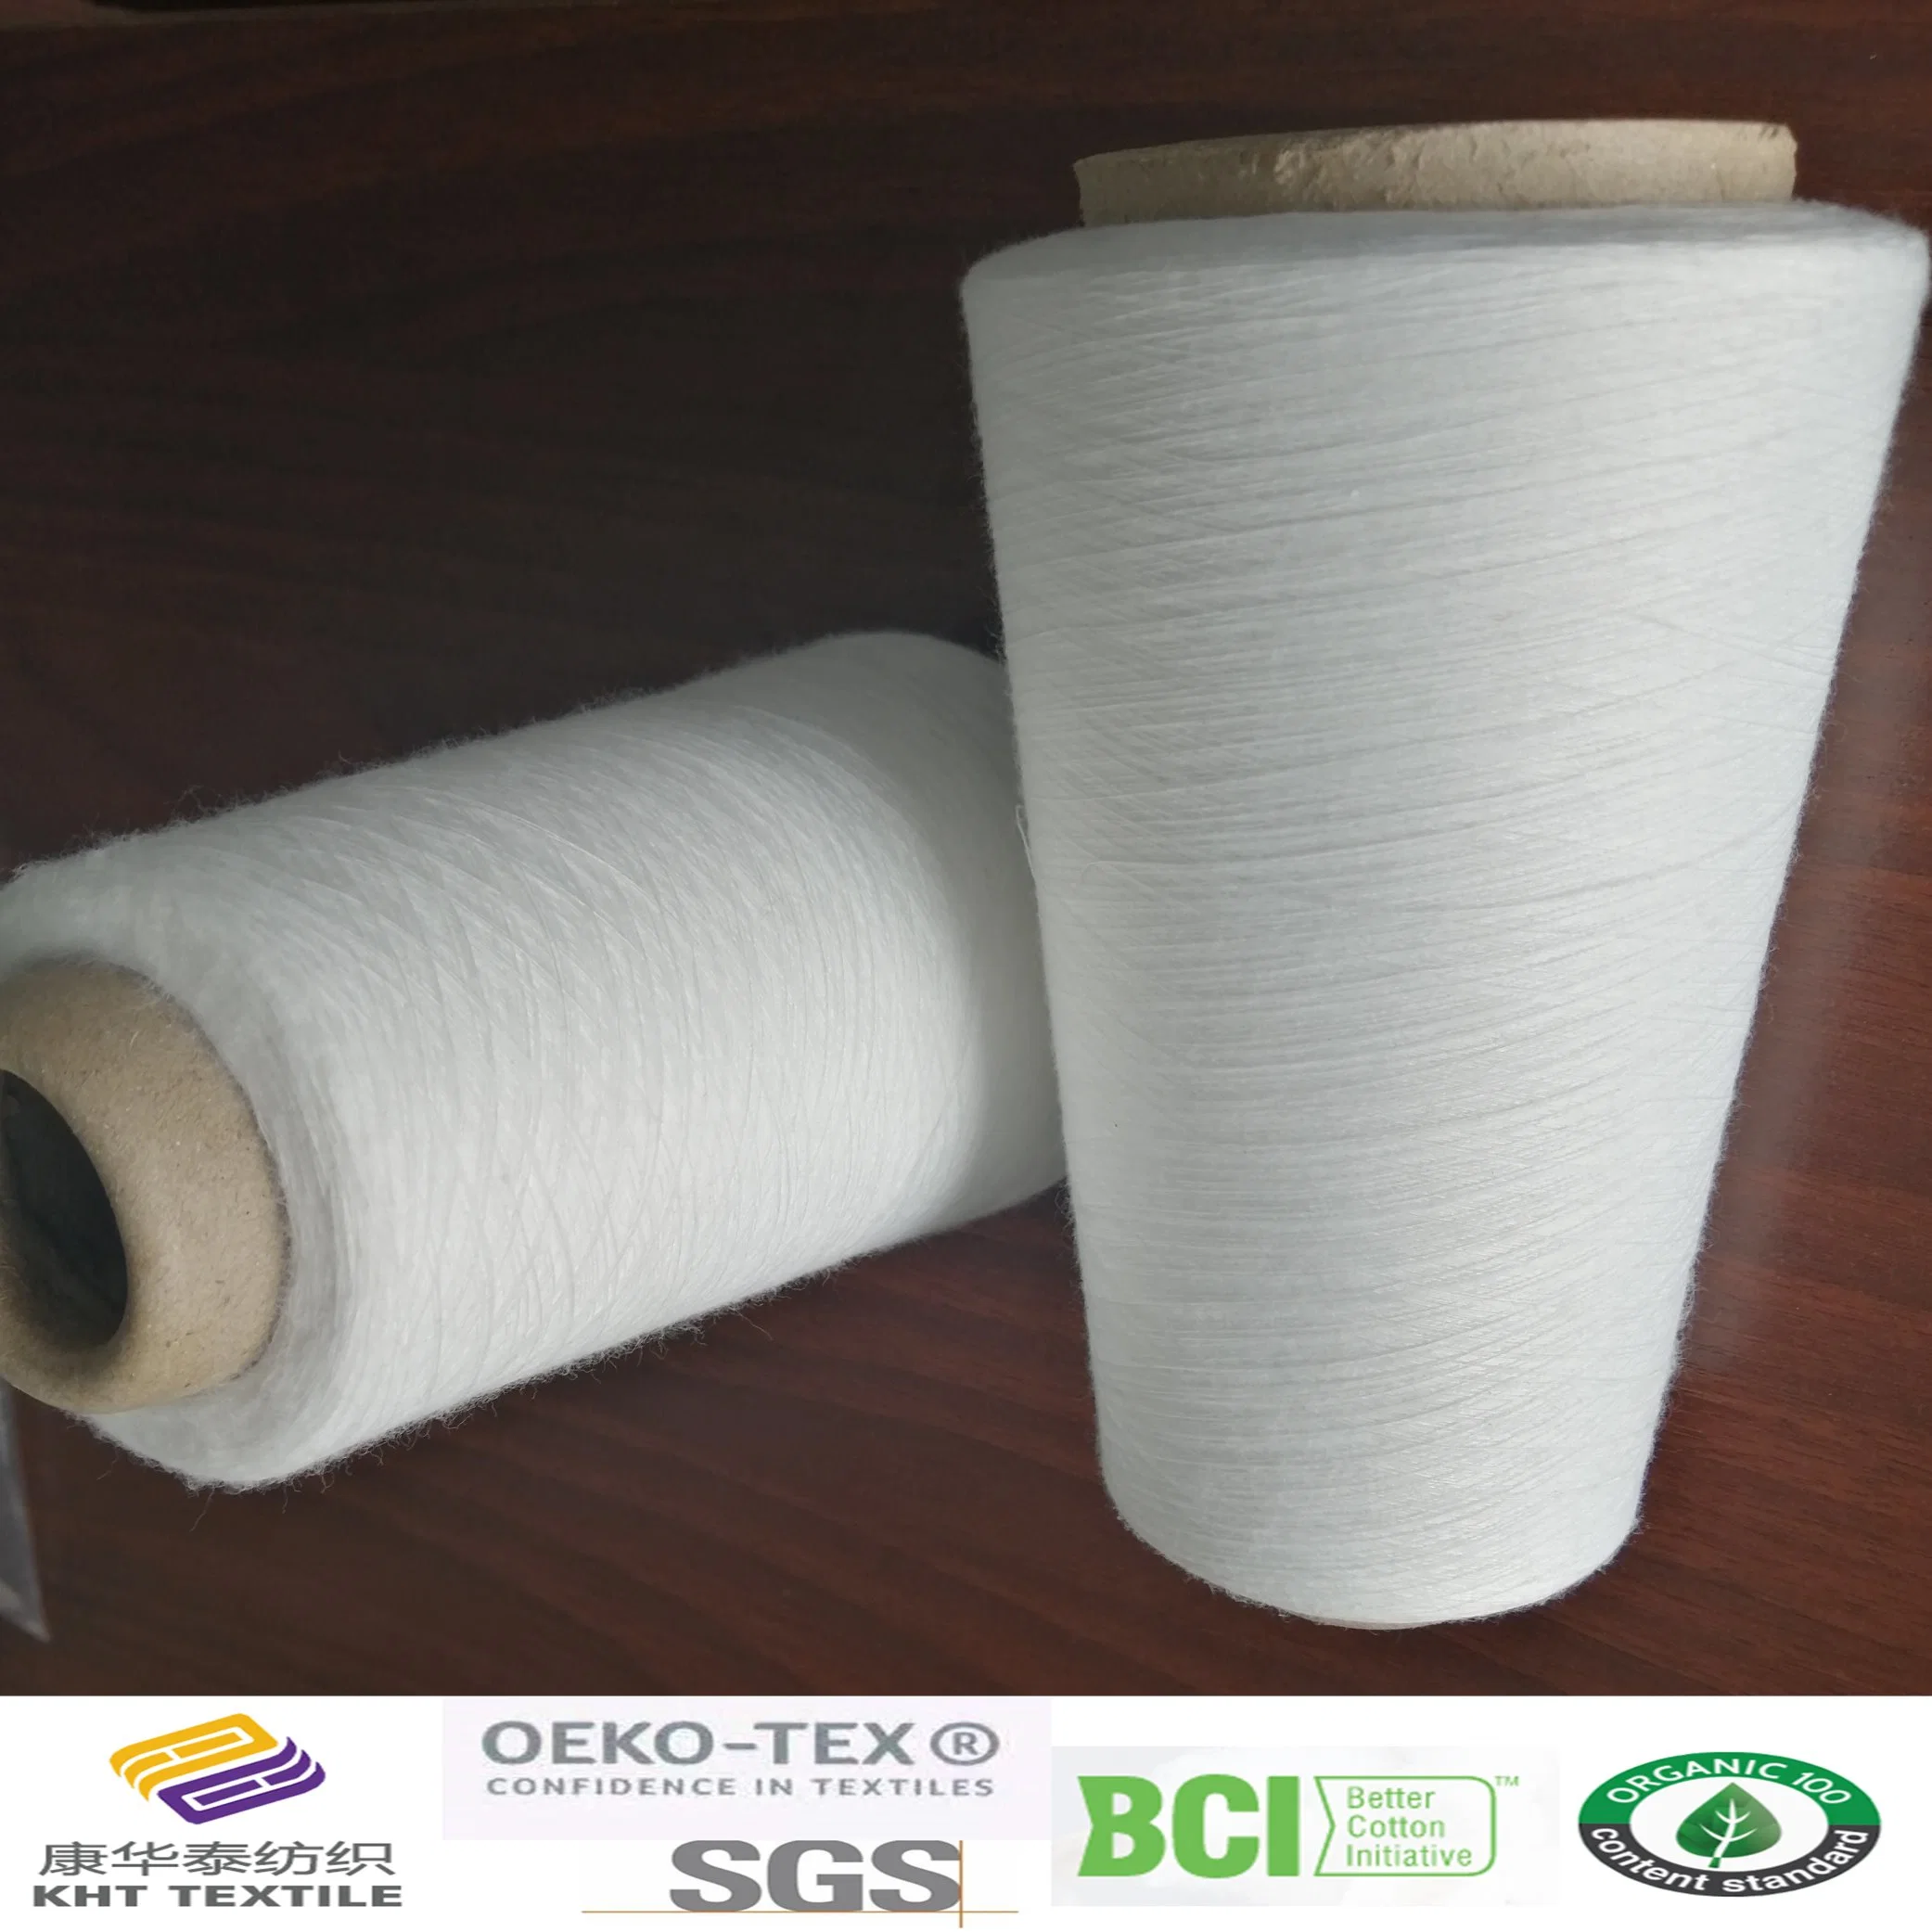 Recycled/ Organic Cotton Yarn Kht Textile China Ne40s/2, 50s/2, 60s/2, 80s/2